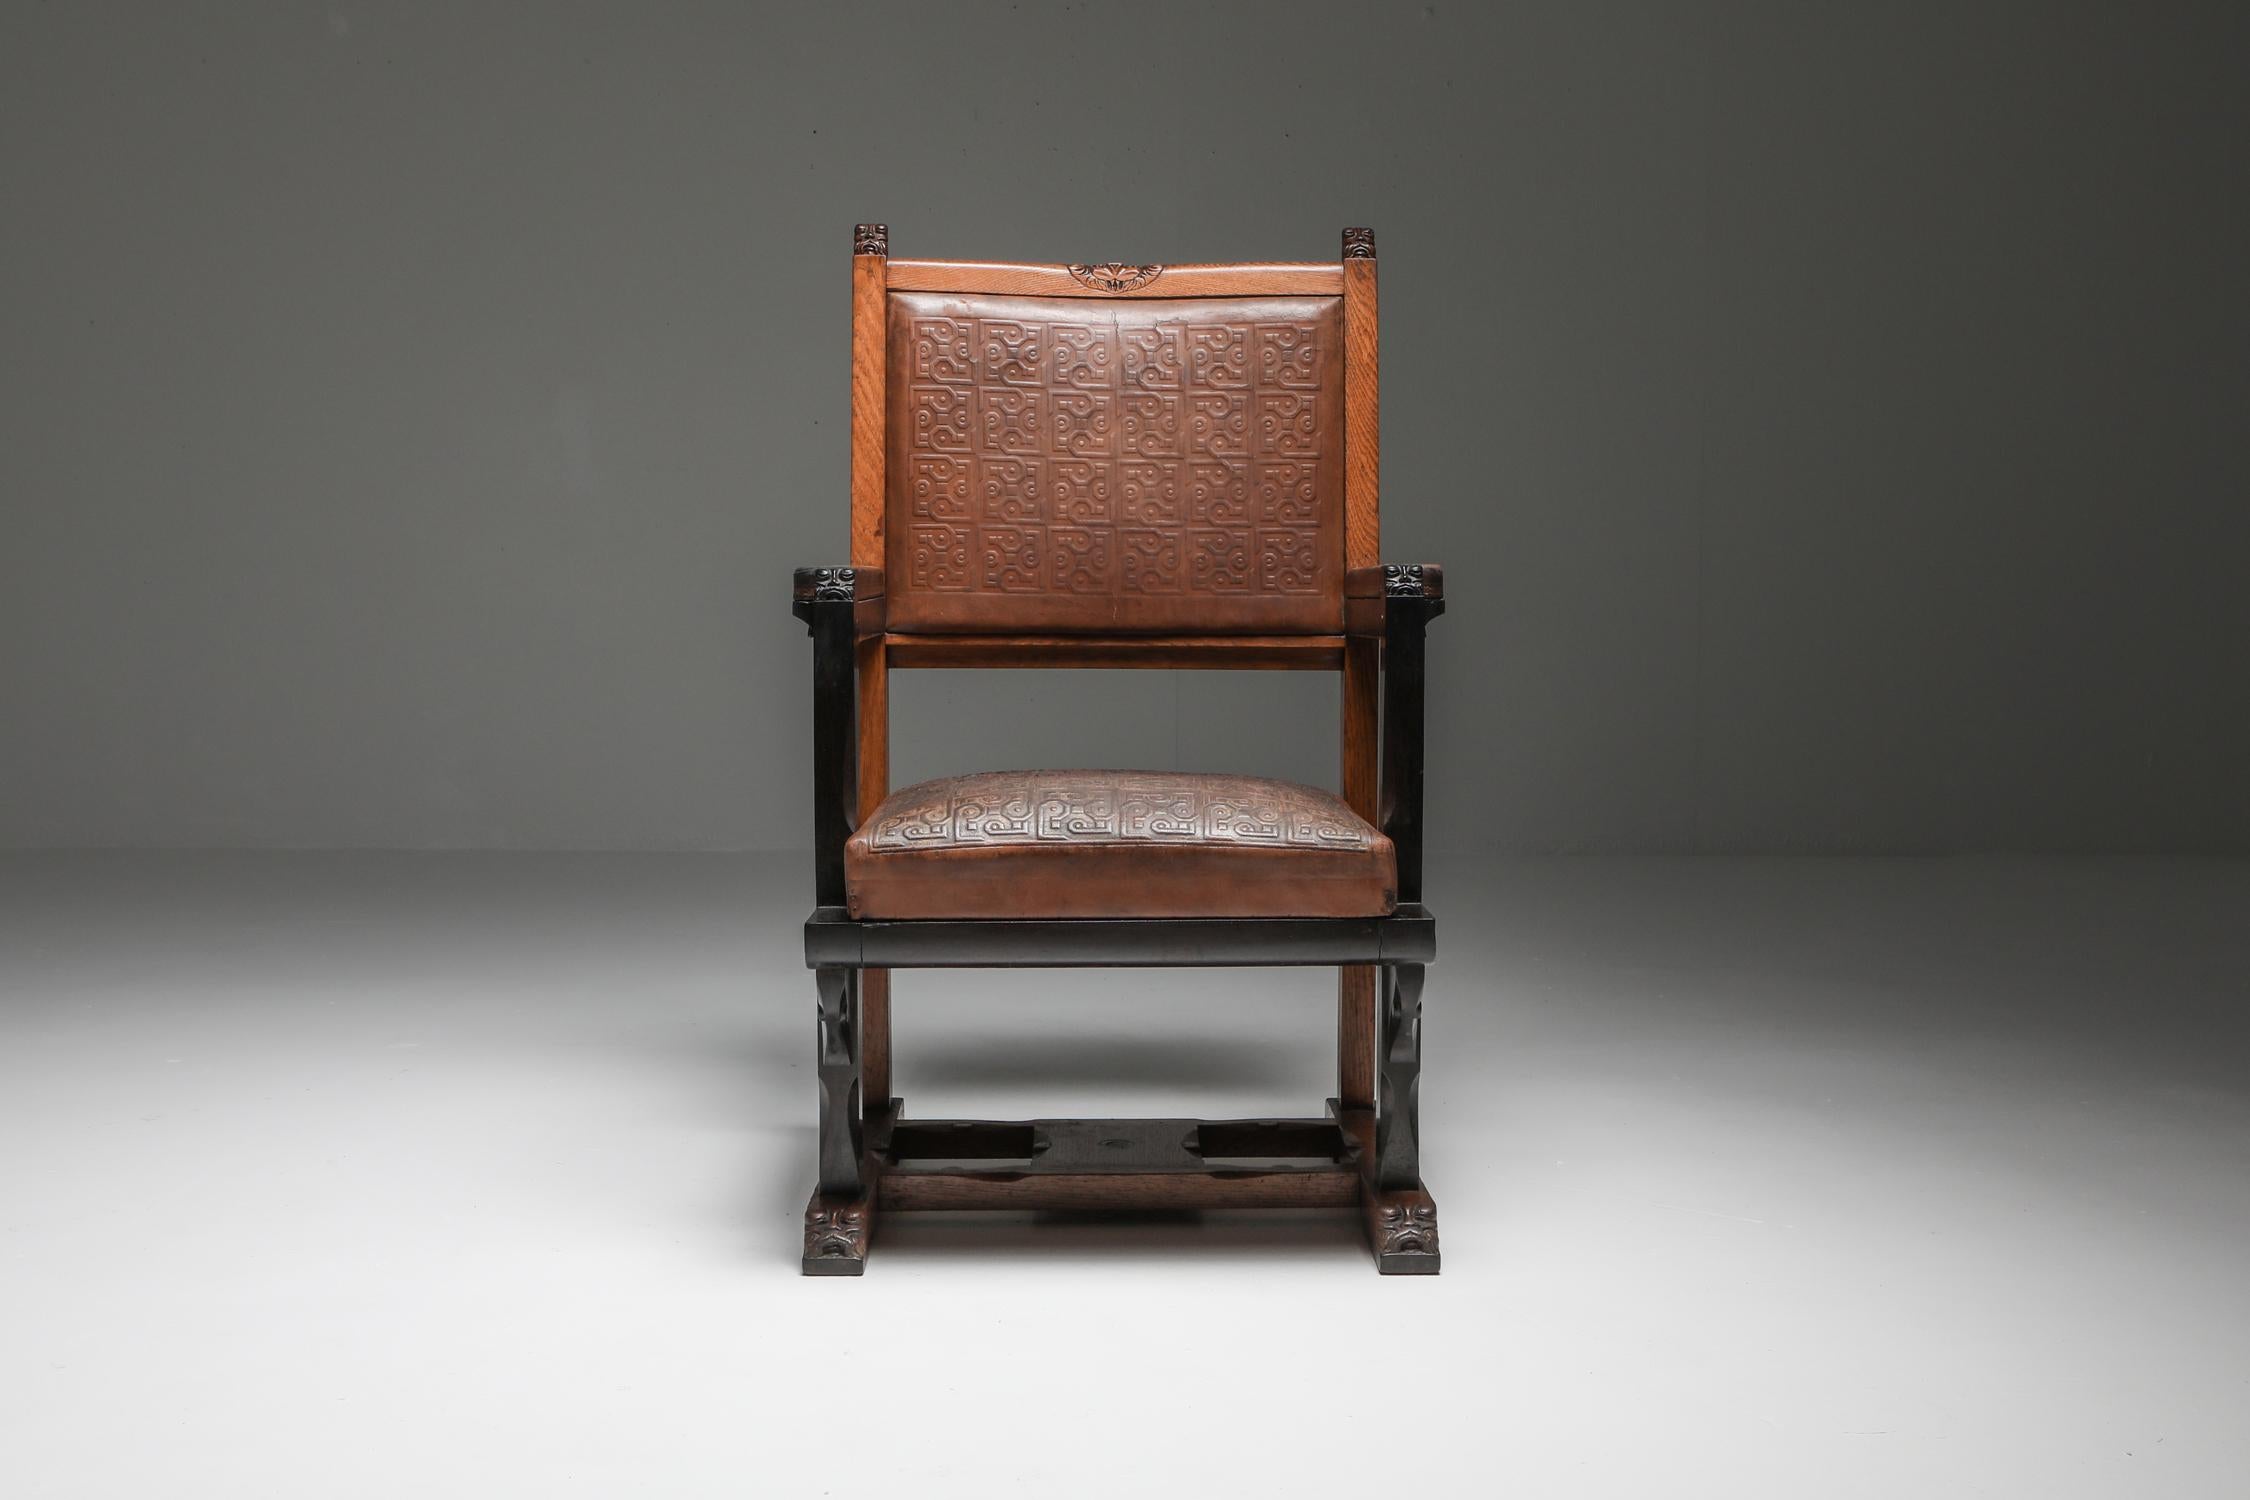 Niederländischer Jugendstil-Sessel der Amsterdamse Schule des Jugendstils von Lion Cachet, 1925 (Art nouveau) im Angebot